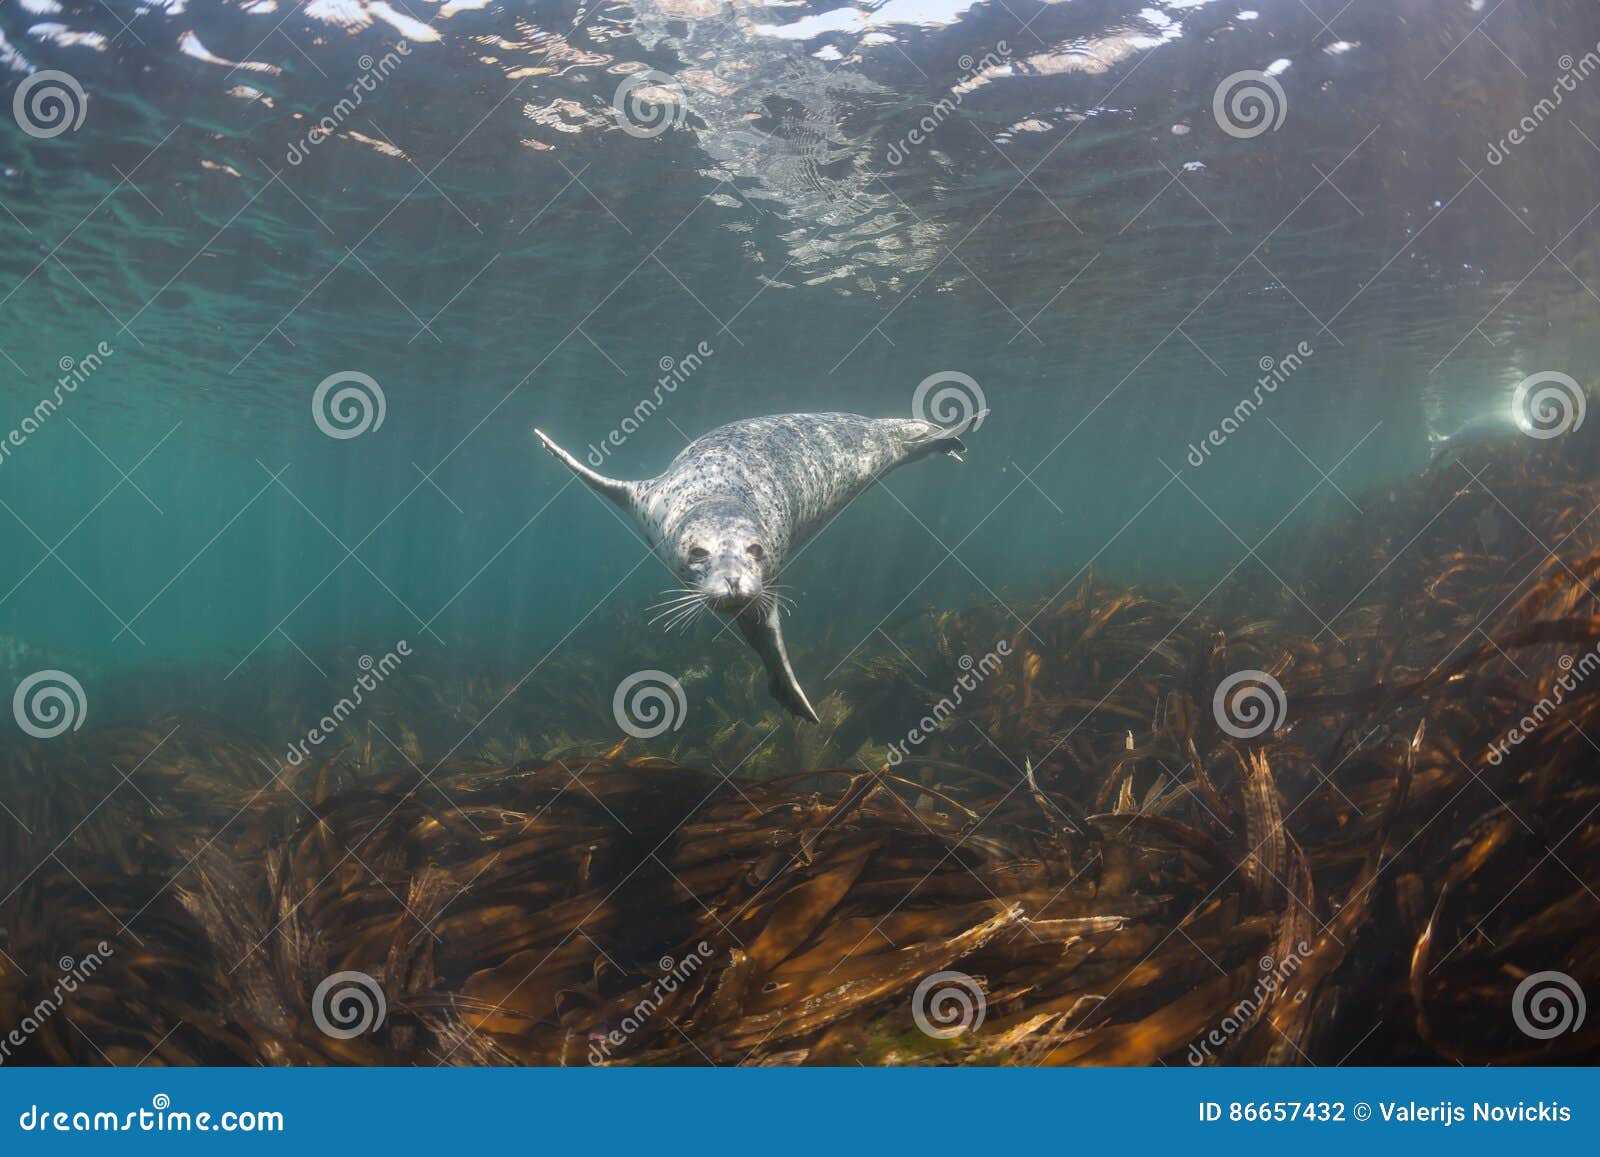 phoca largha larga seal, spotted seal